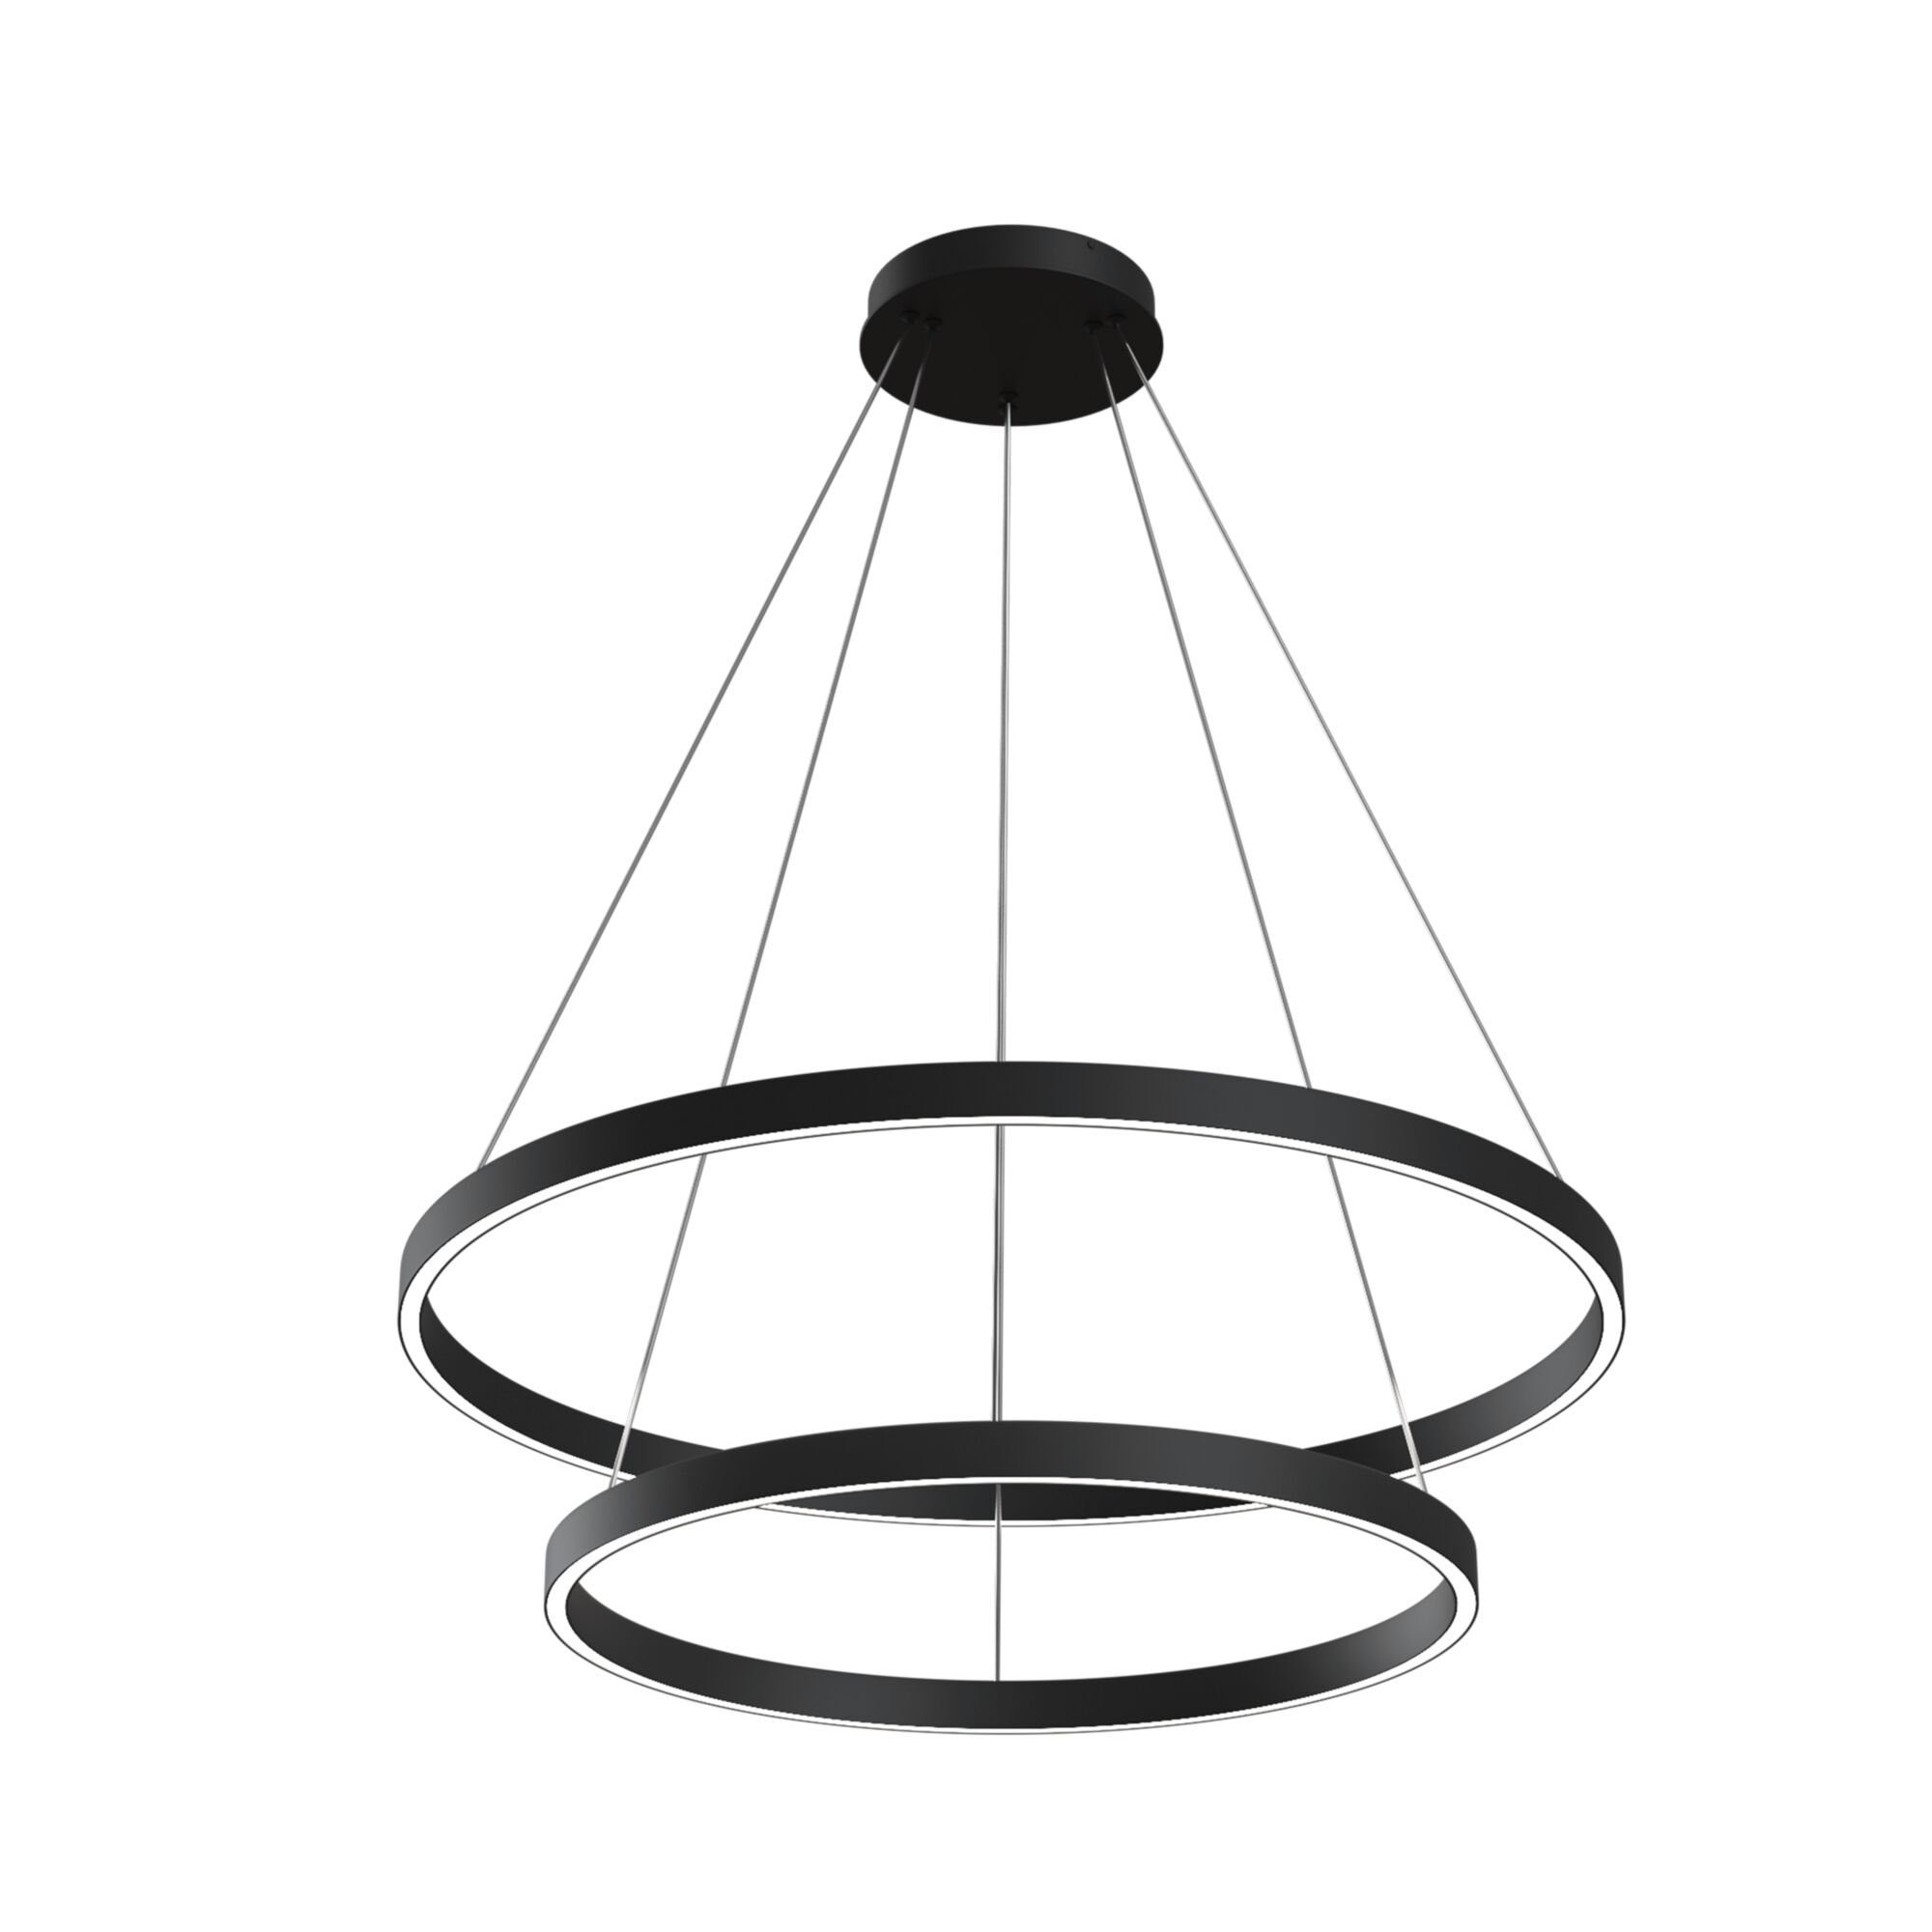 dekoratives hochwertige Lampe Pendelleuchte cm, & fest integriert, 4 LIGHTING Rim MAYTONI LED Raumobjekt DECORATIVE Design 80x120x80